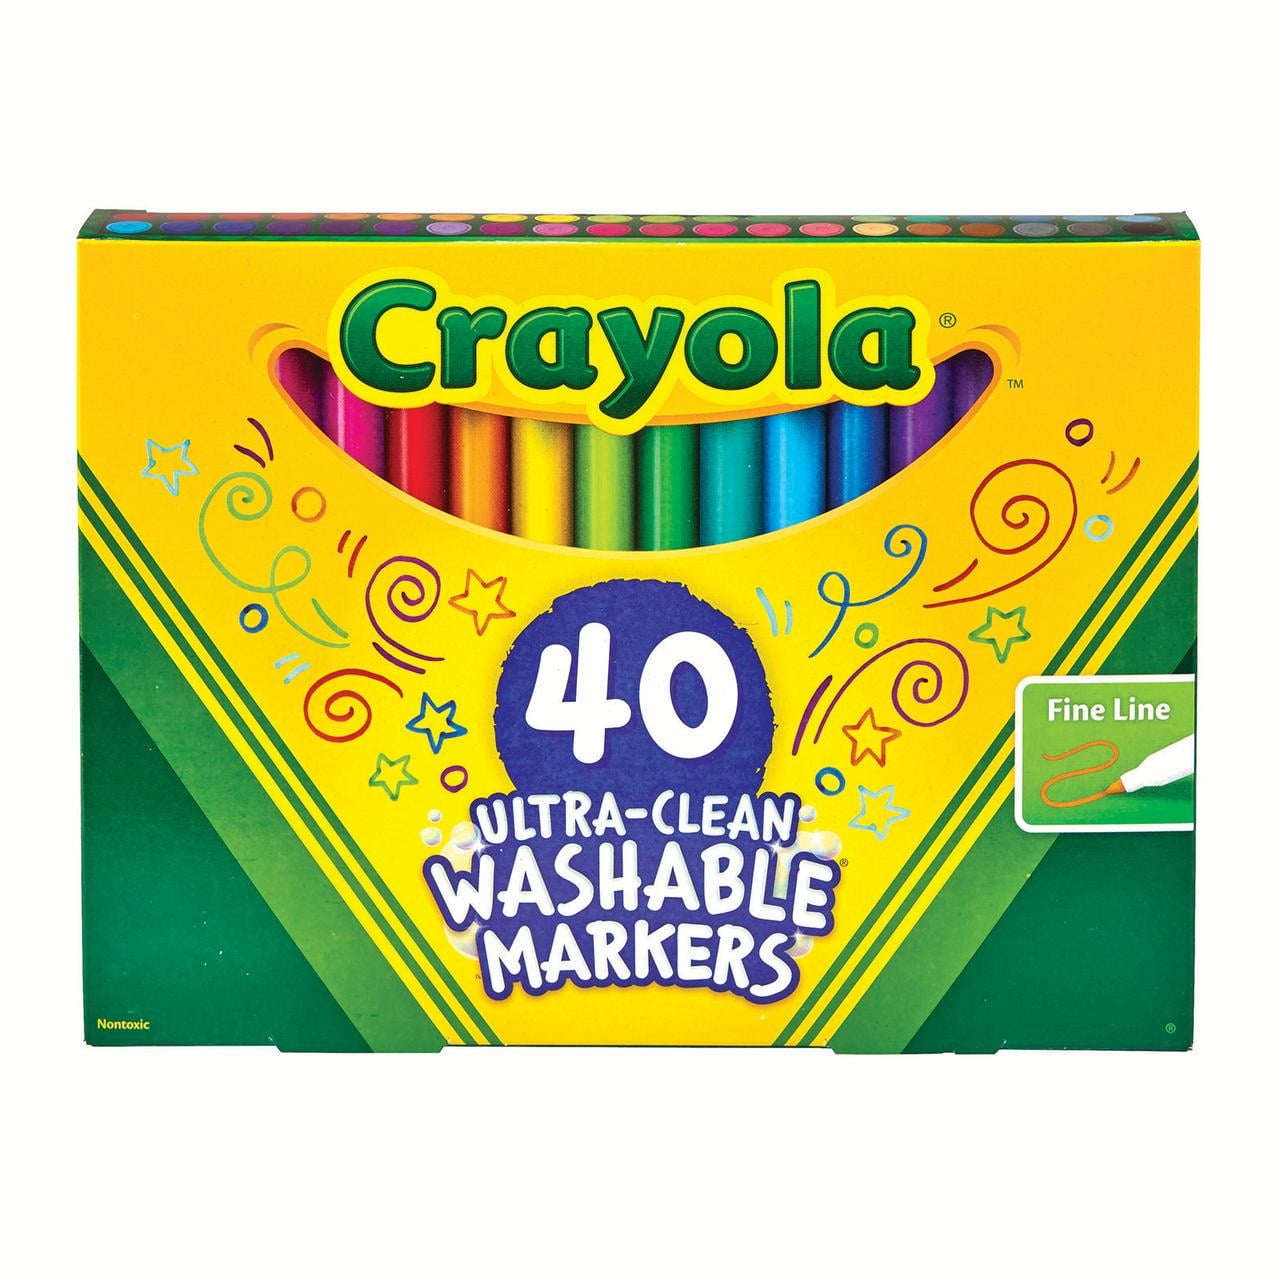 Cra-Z-Art® Markers  Broadline, Washable, 40 Colors, 40/Bx, Ast